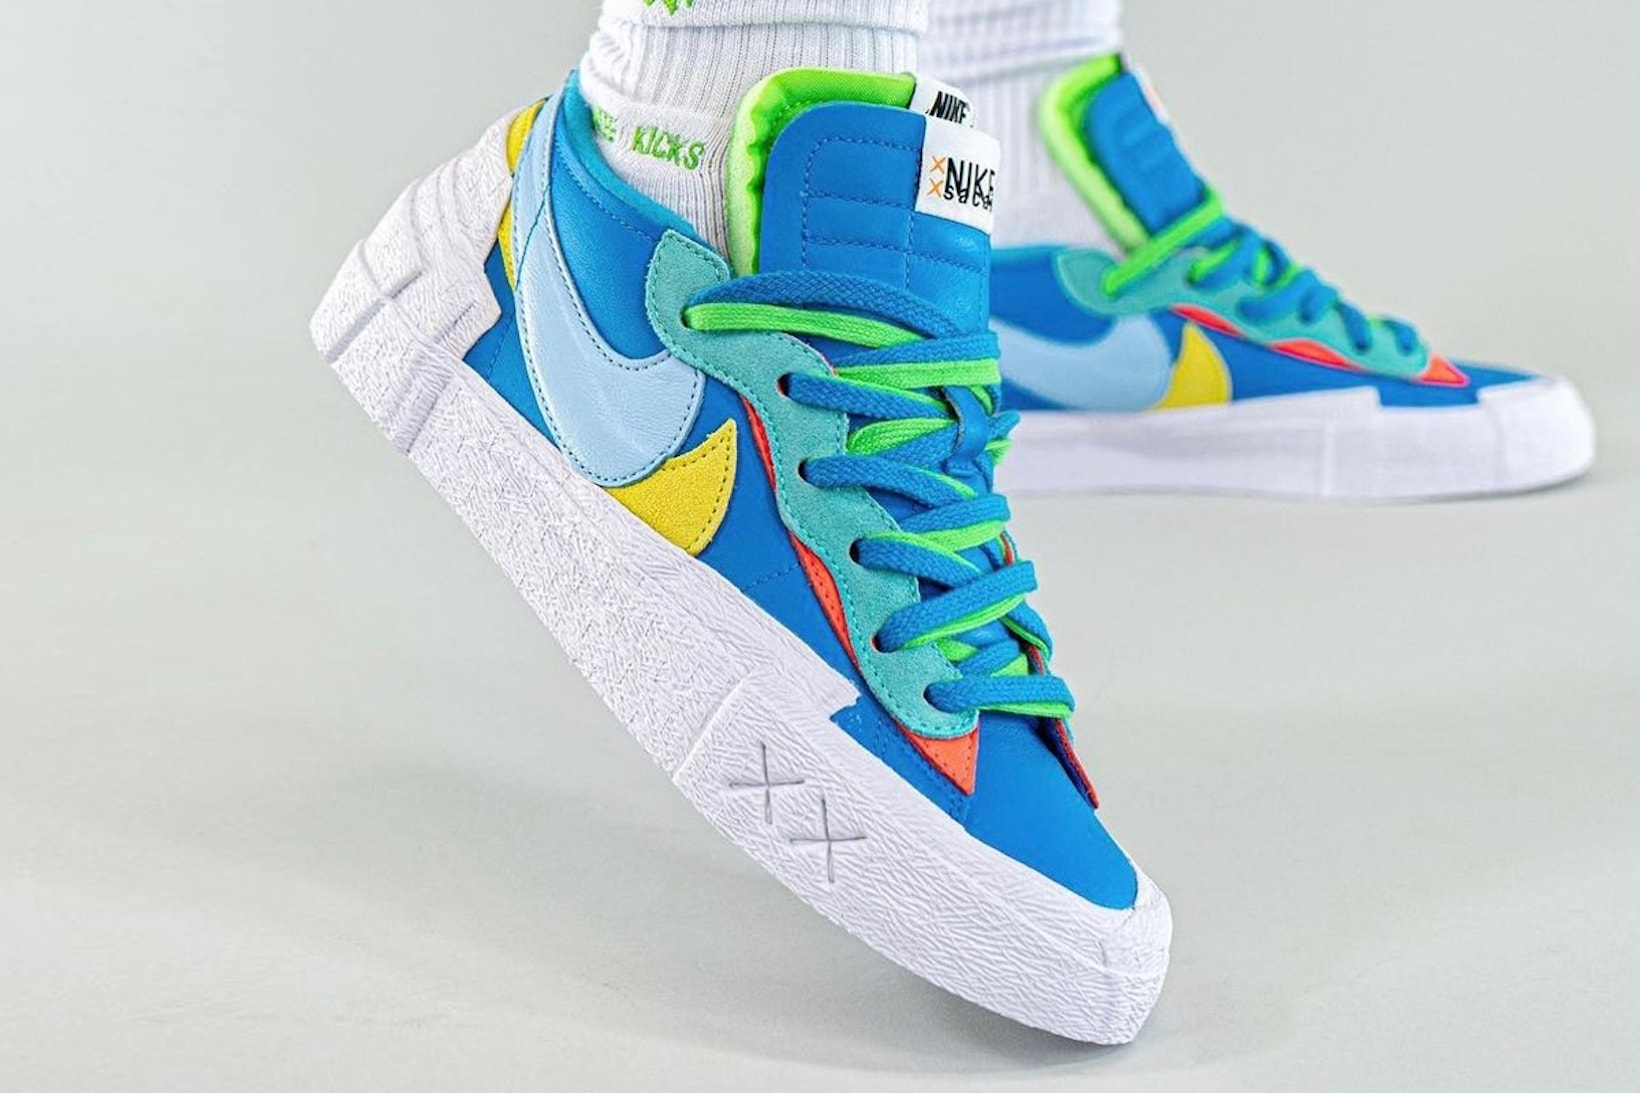 KAWS sacai Nike Blazer Lows Red Blue Yellow Green Shoes Kicks Collaboration Sneakerhead Footwear Sneakers